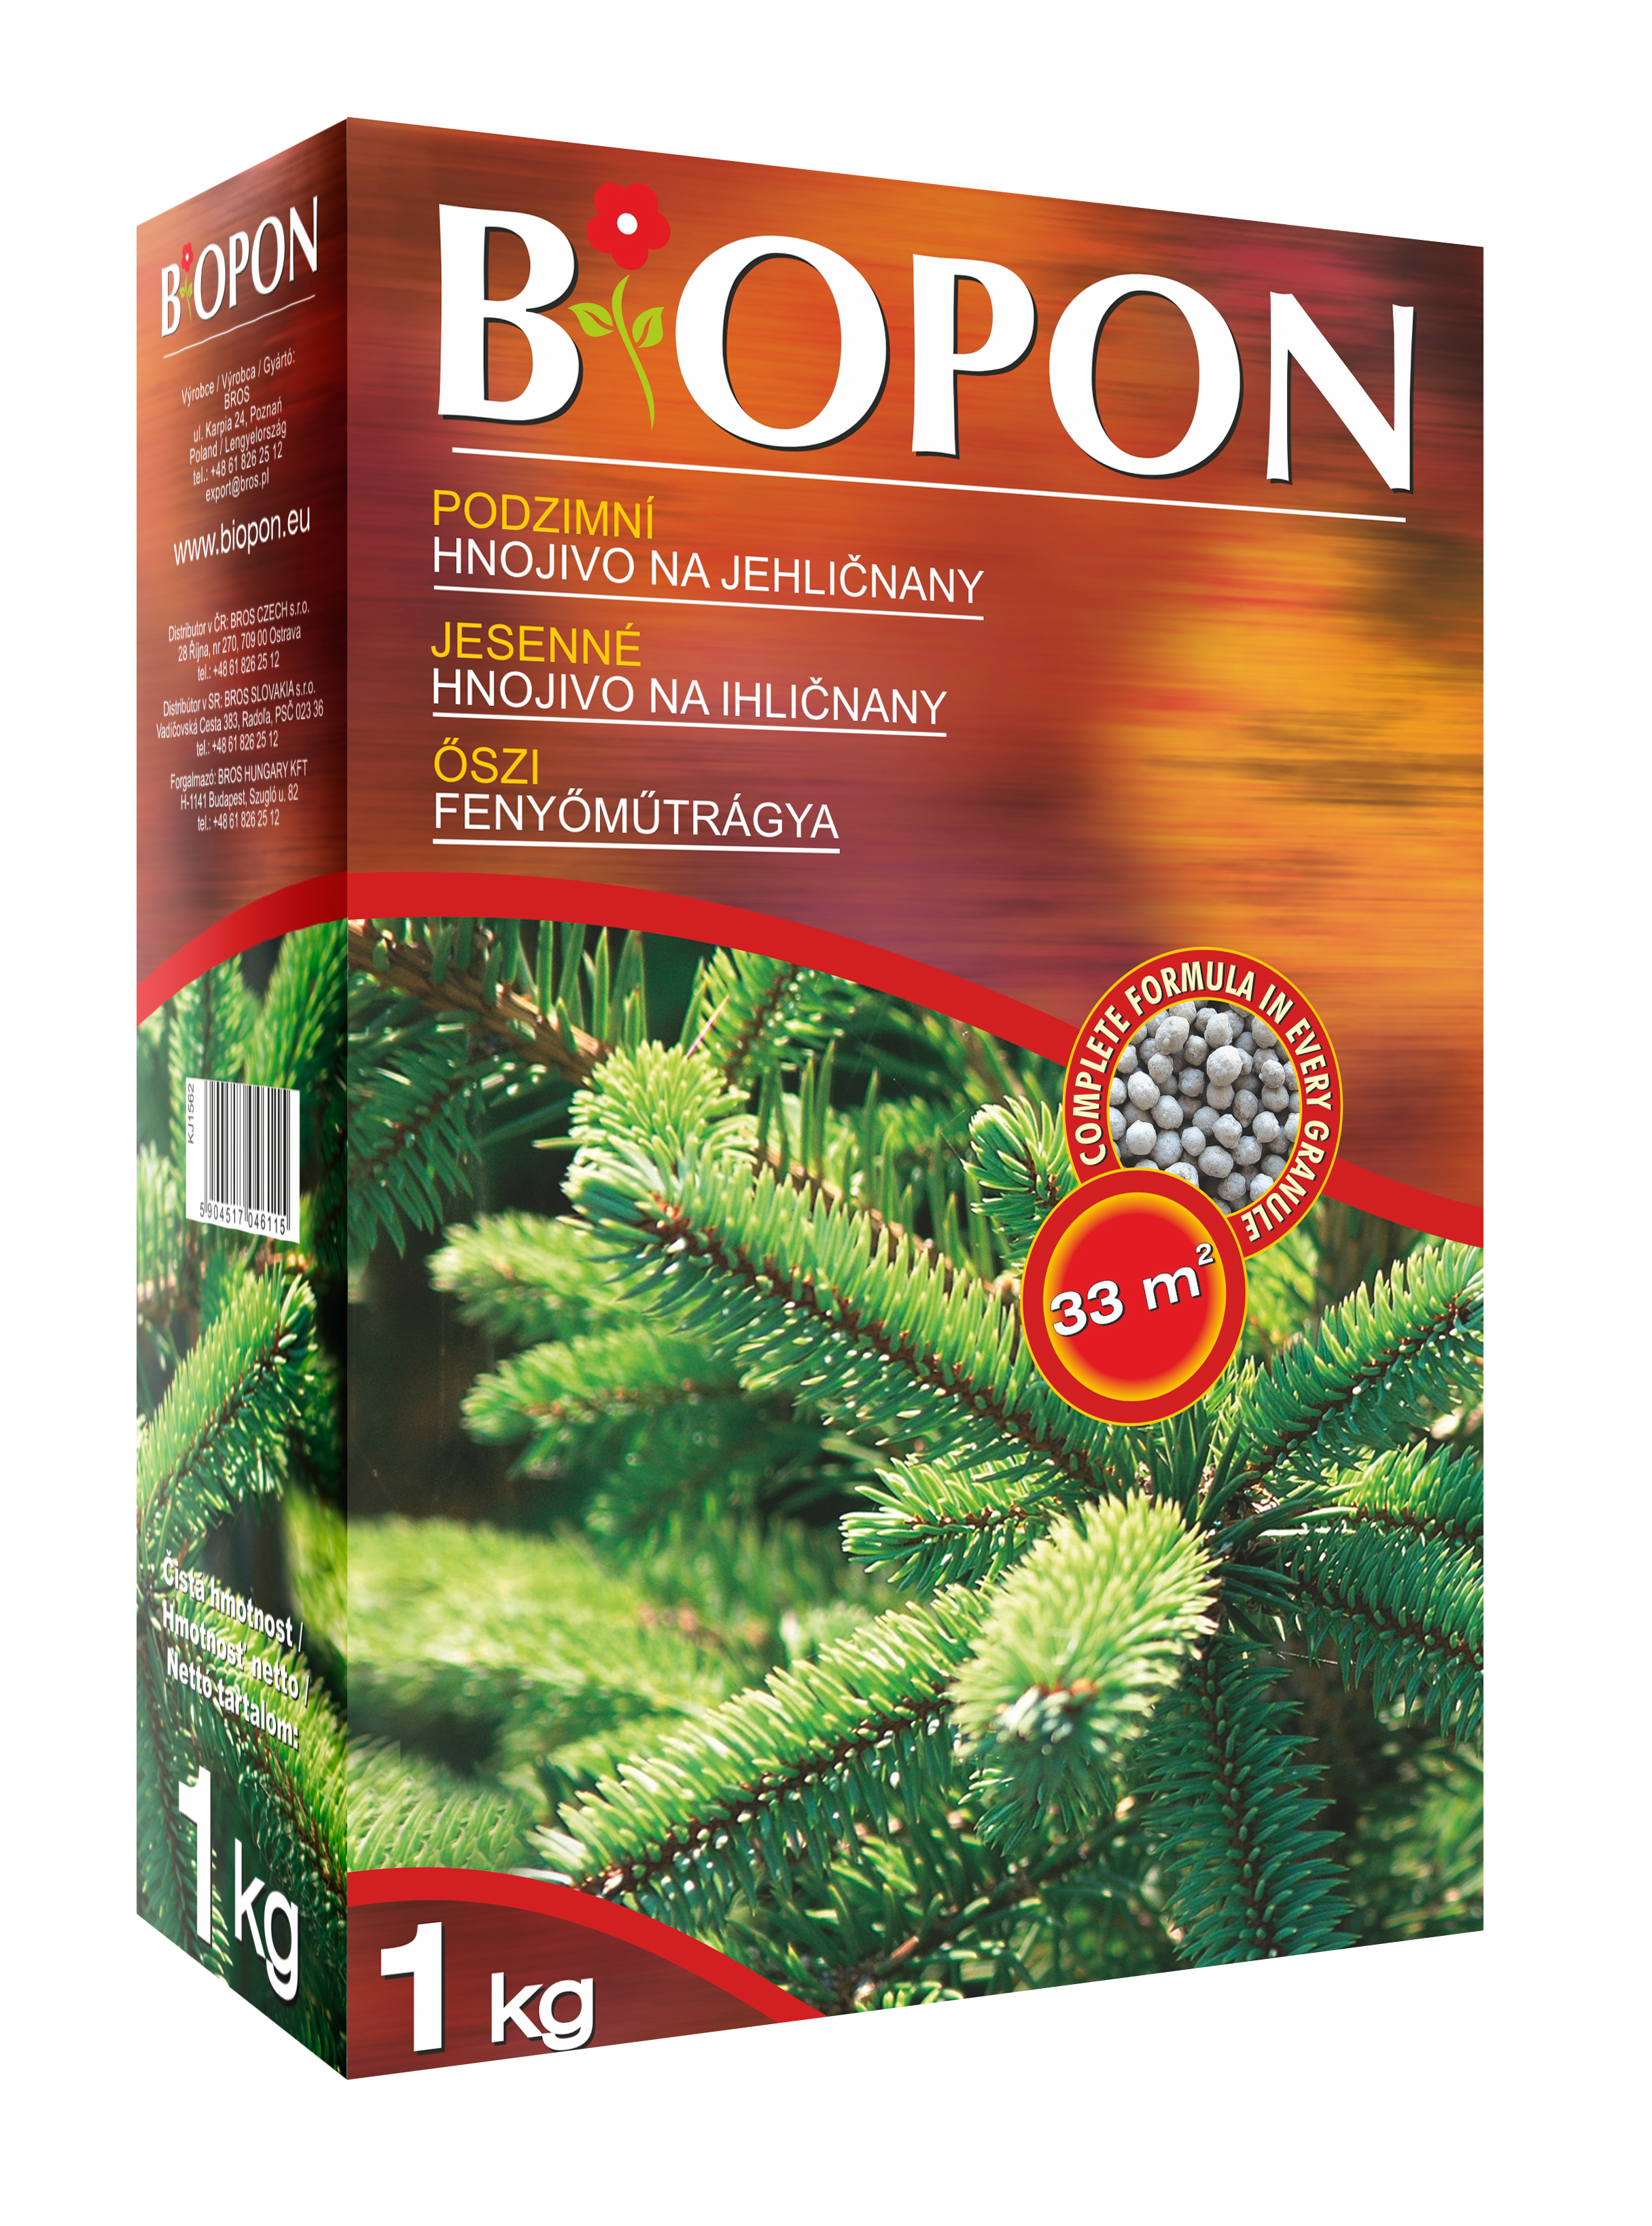 Biopon autumn pine fertilizer 1 kg